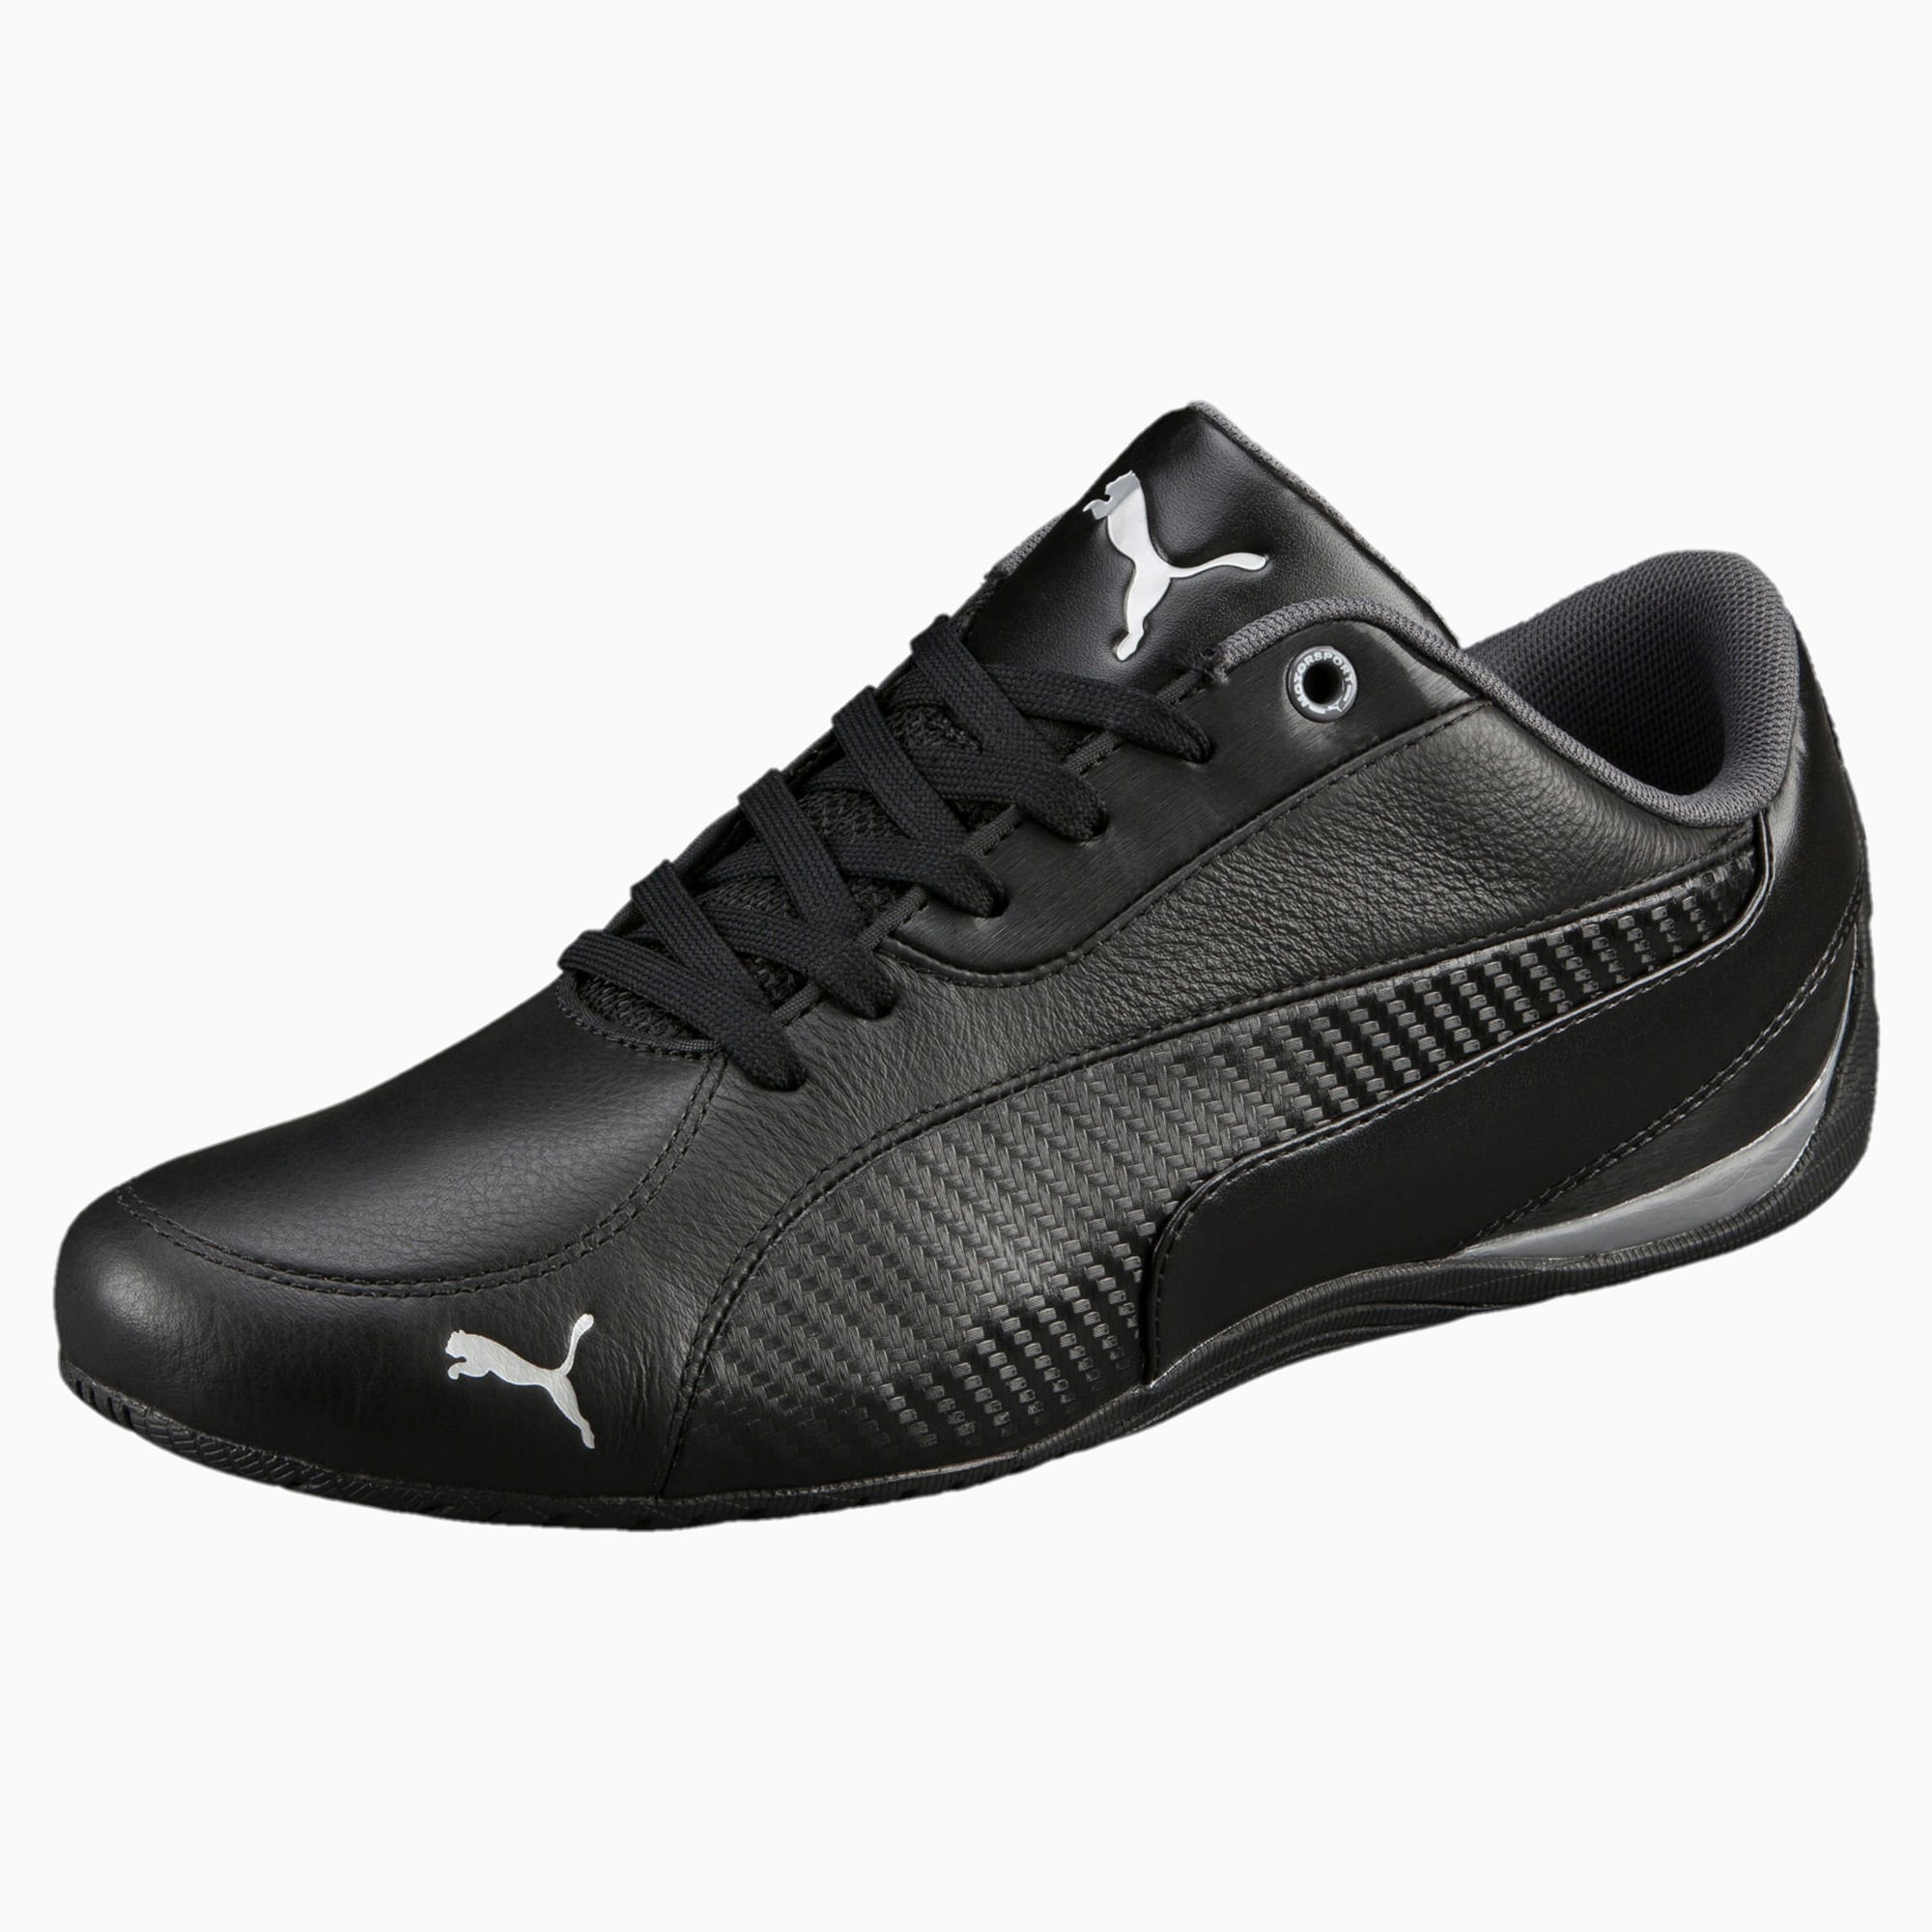 puma carbon fiber shoes